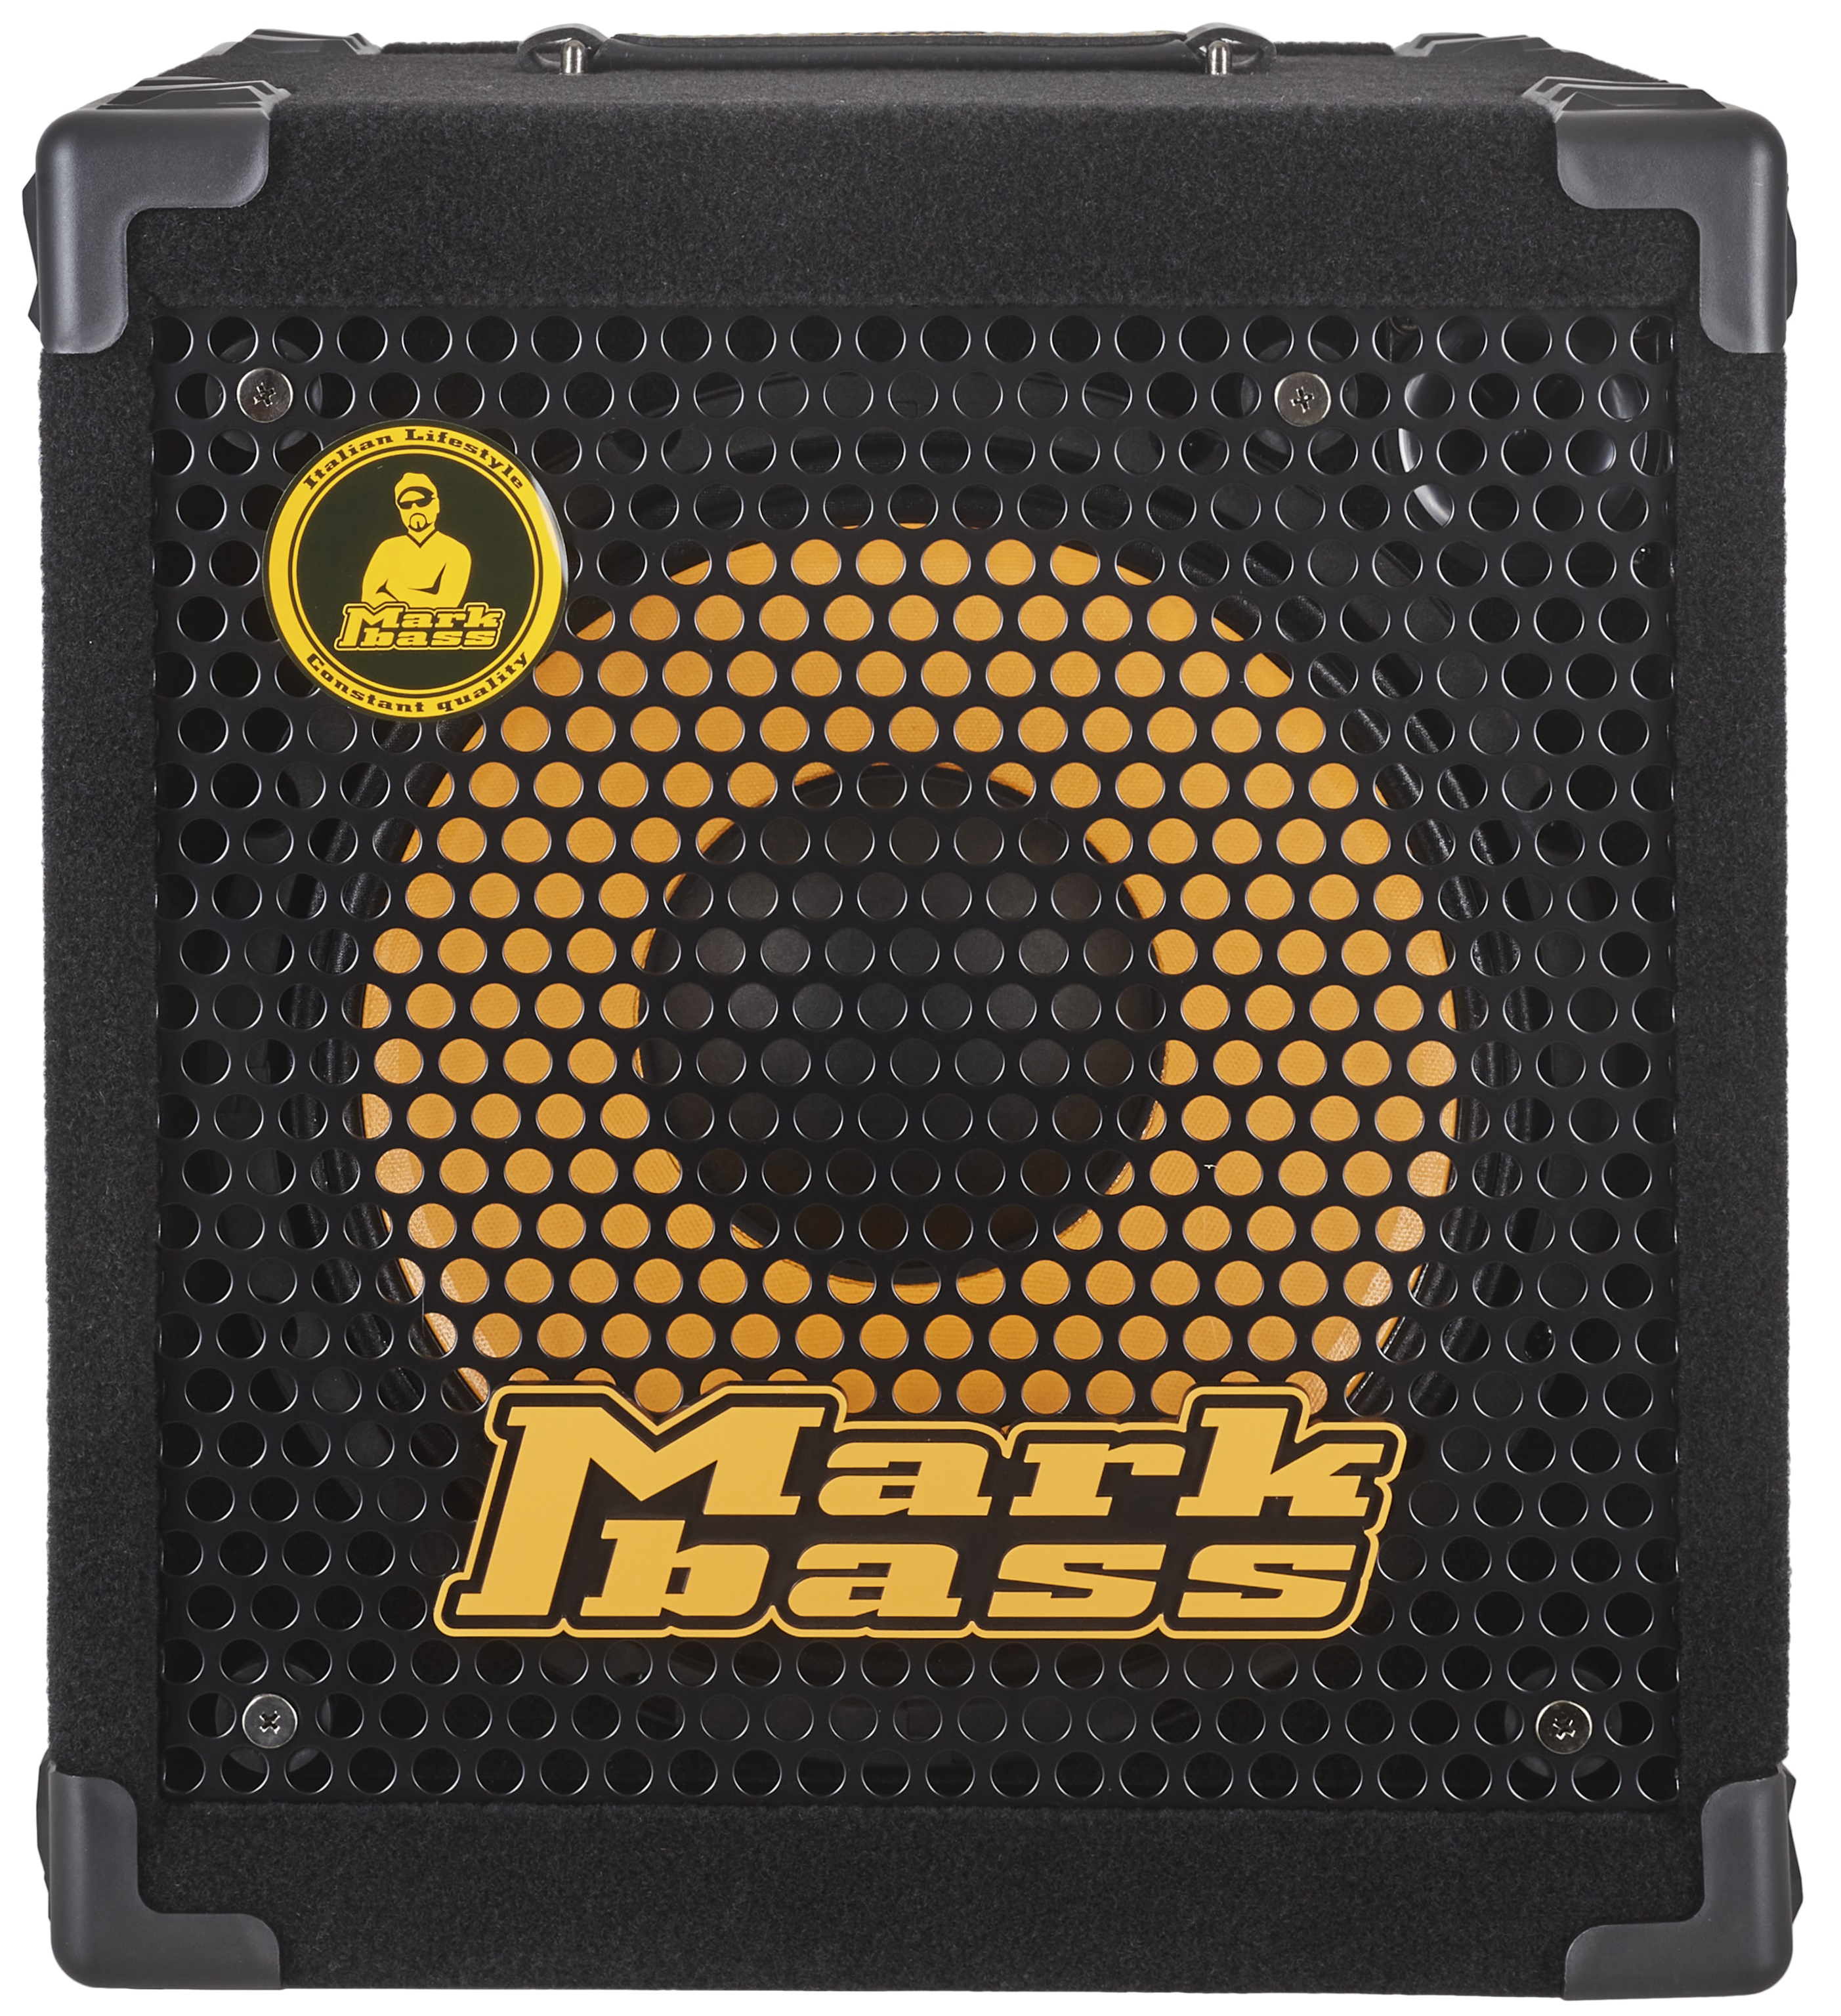 Markbass Mini CMD 121P IV